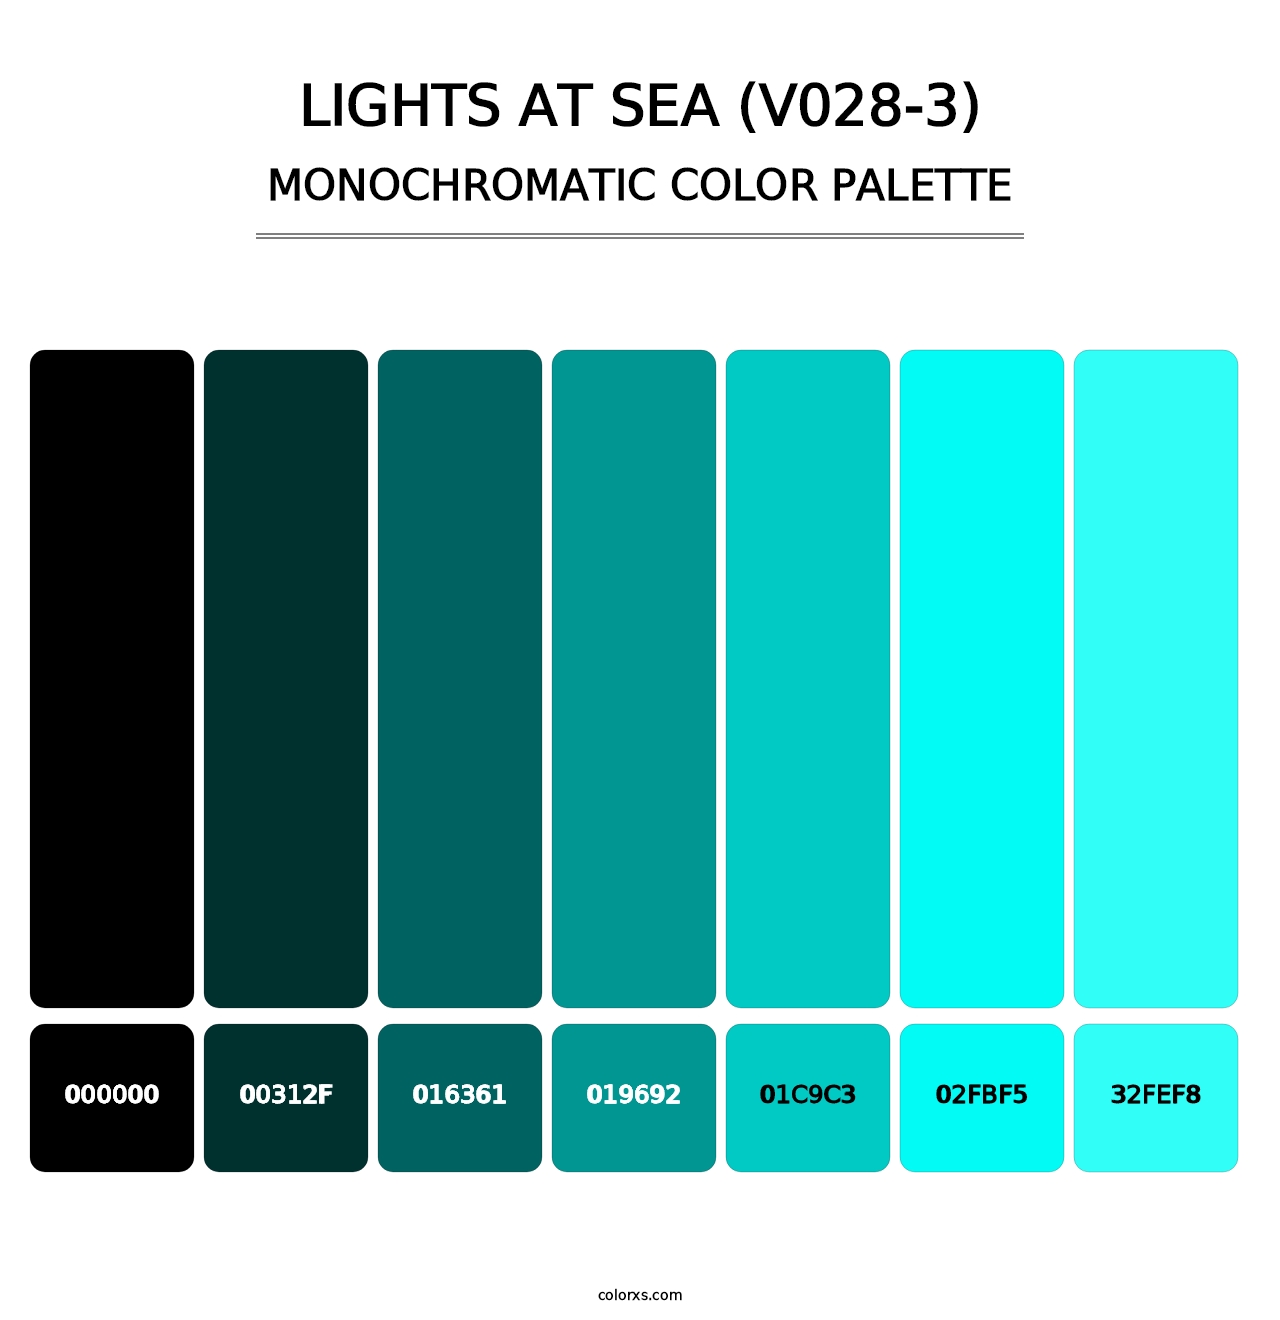 Lights at Sea (V028-3) - Monochromatic Color Palette